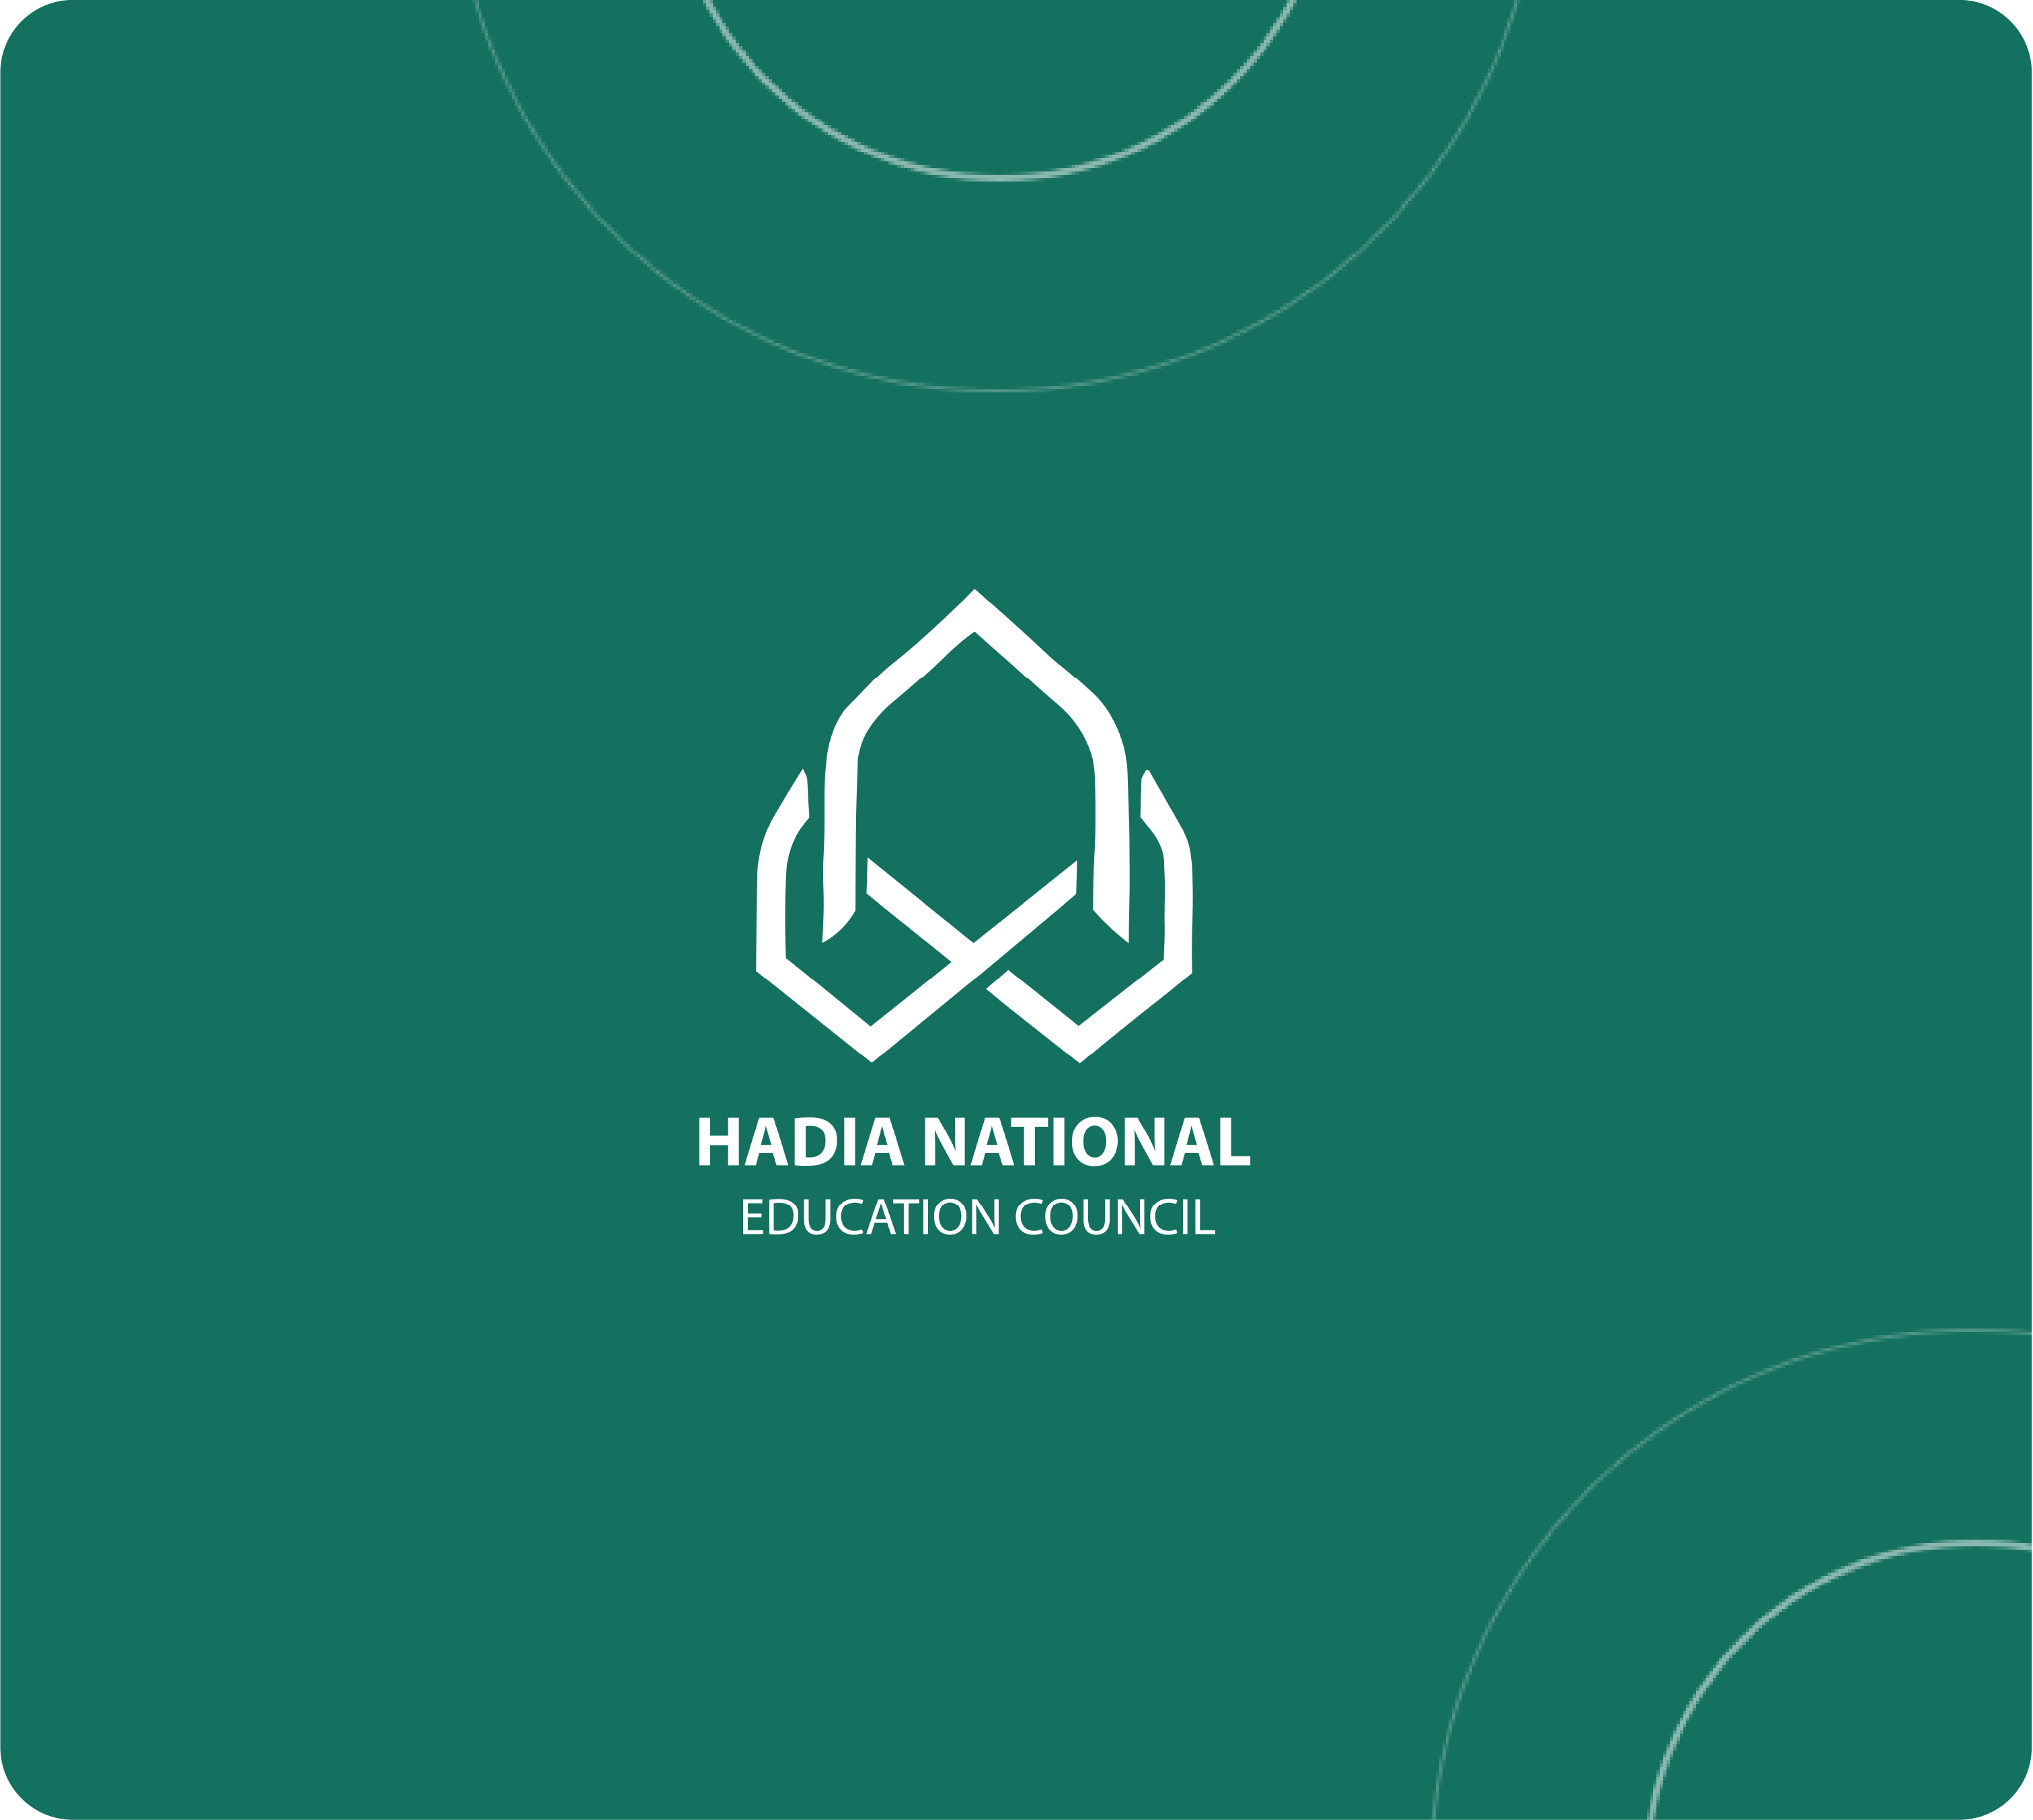 HNEC- Hadia National Education Council